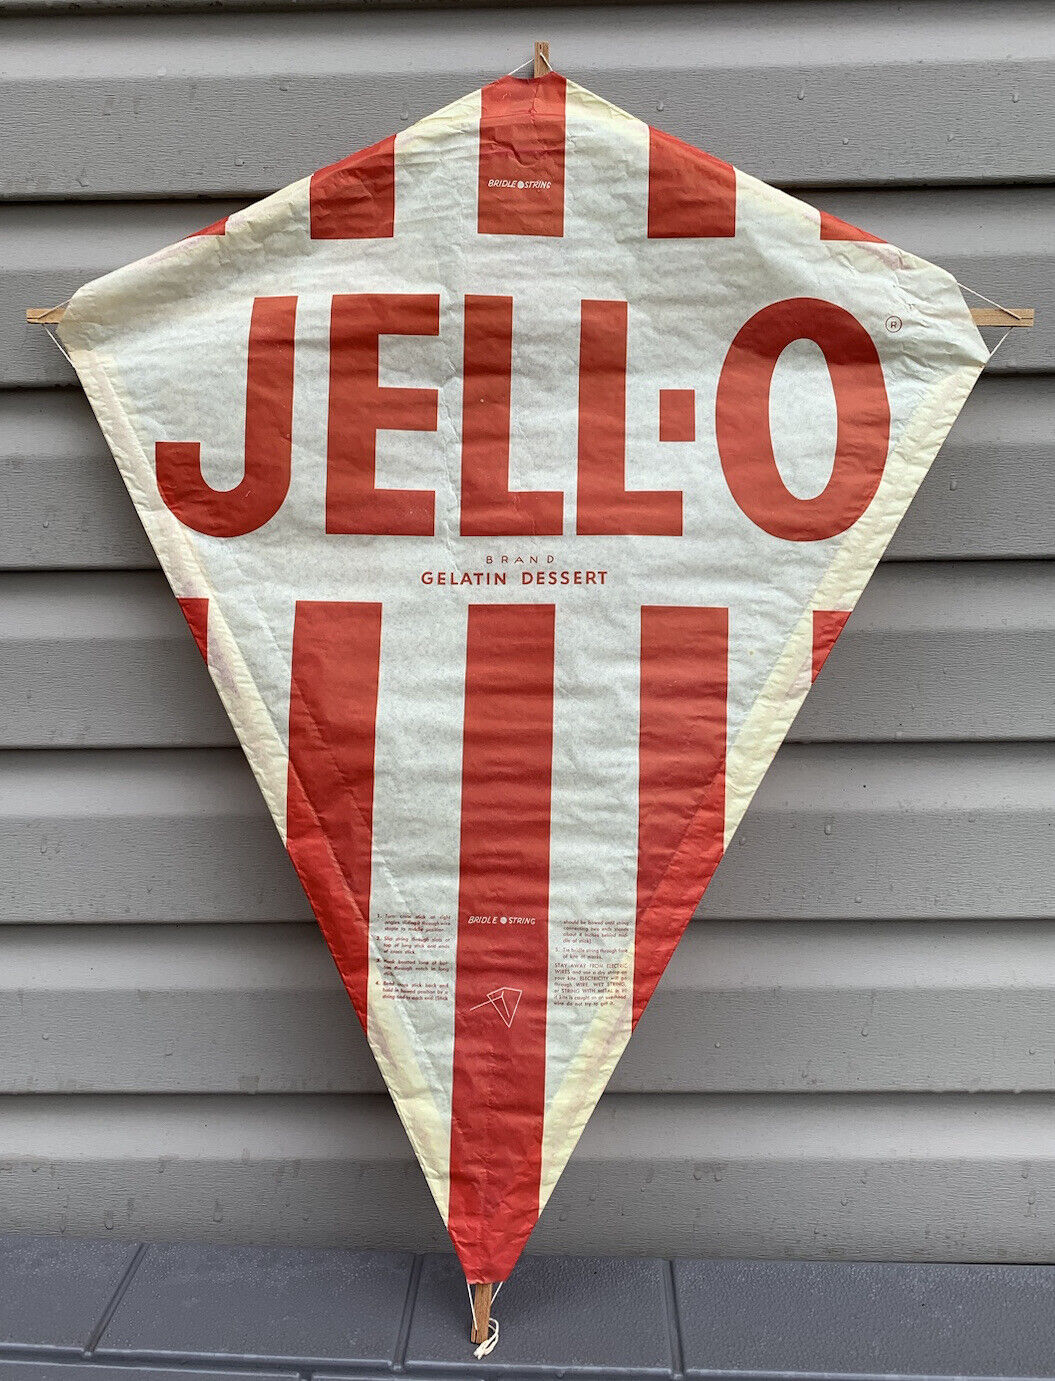 Lot 5 *See Description* NOS Vtg Jello Jell-O Gelatin Kite Toy Advertising Promo